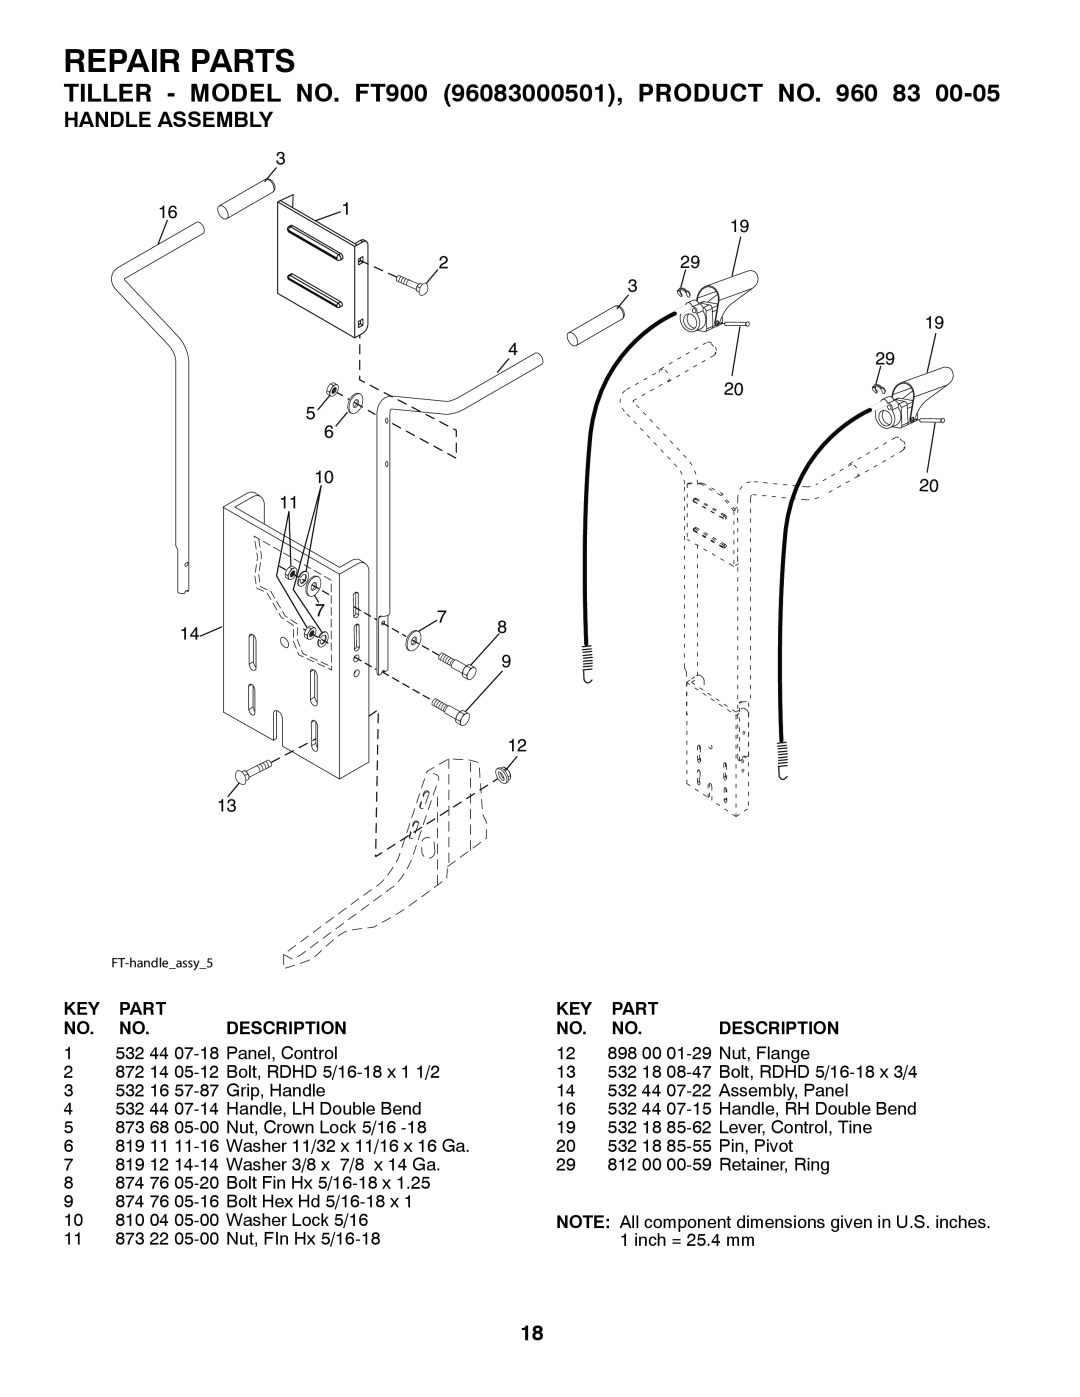 Husqvarna FT900 owner manual Repair Parts, Handle Assembly, Description 